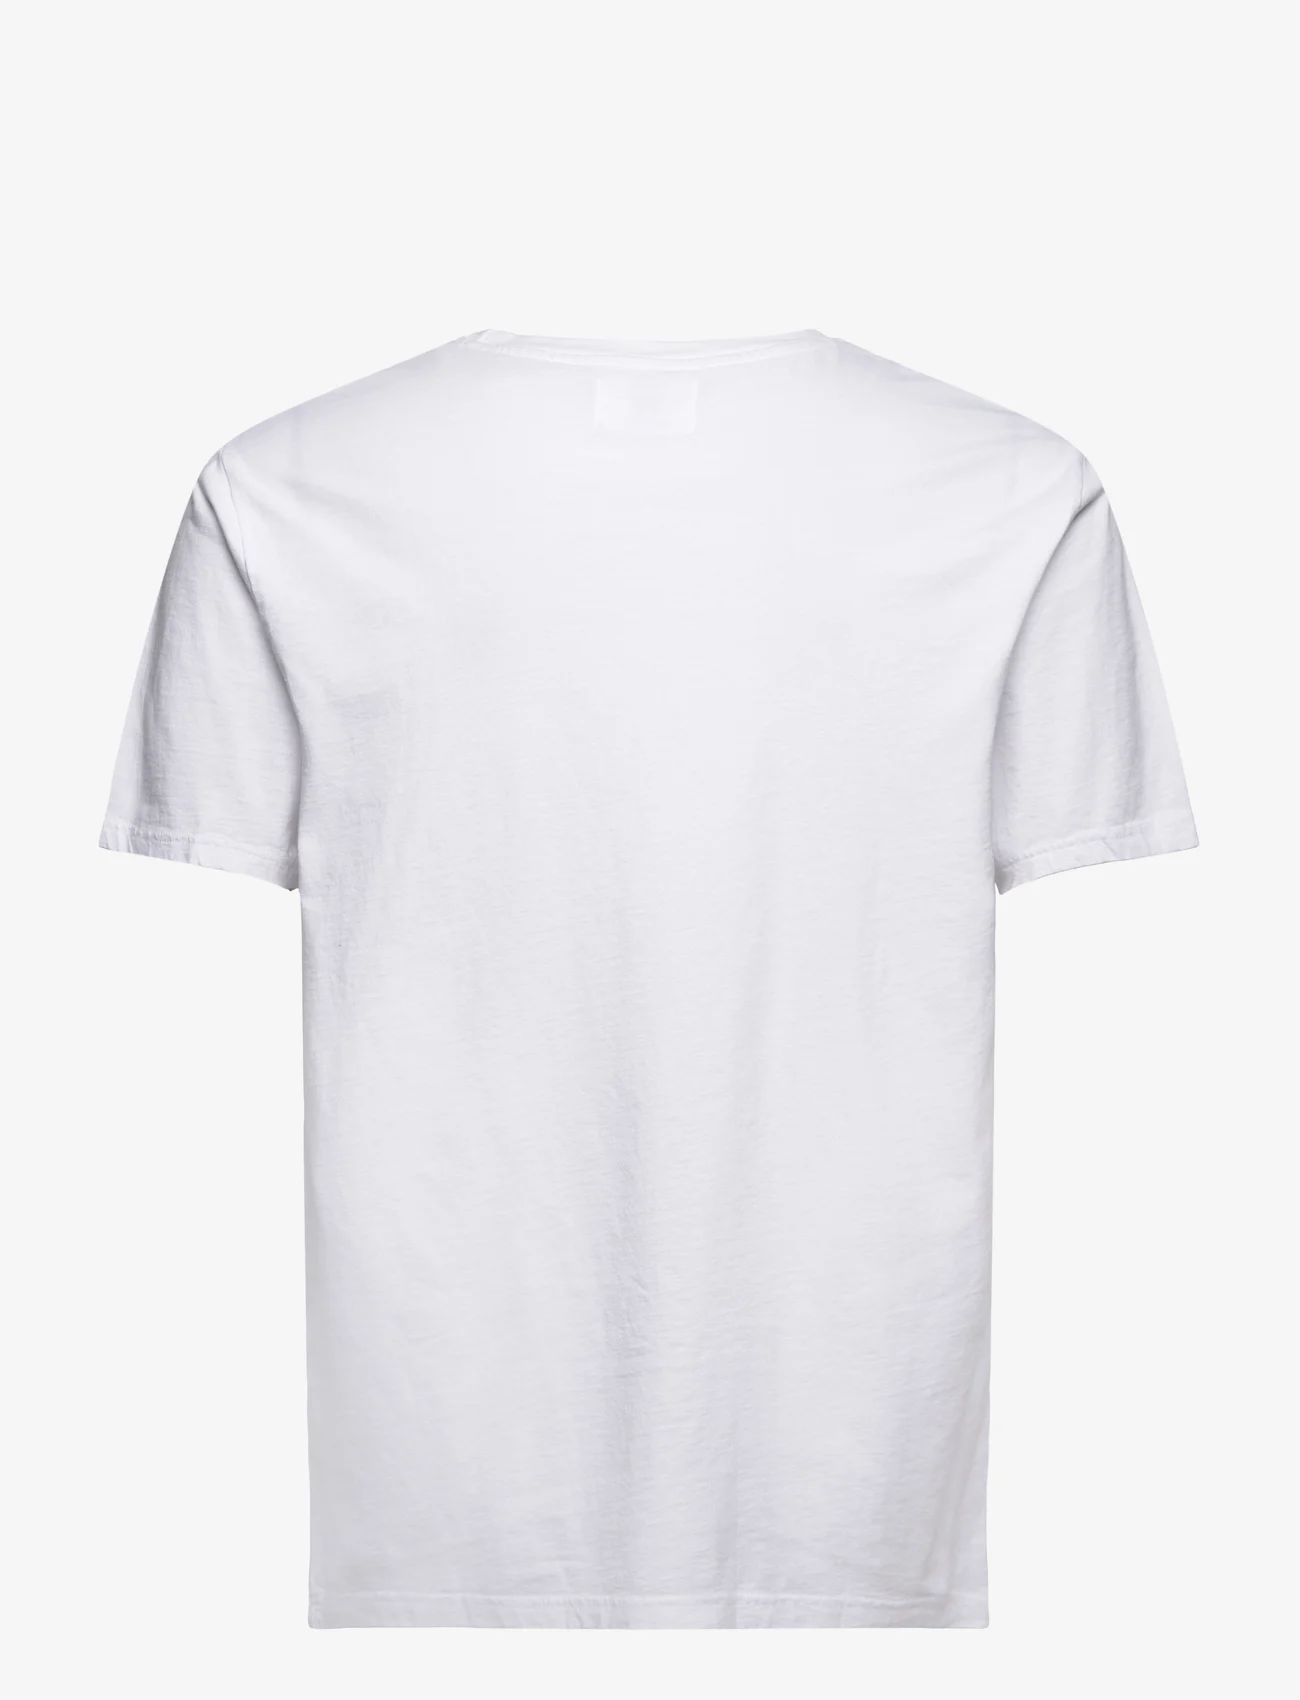 Double A by Wood Wood - Ace T-shirt - lühikeste varrukatega - white/white - 1